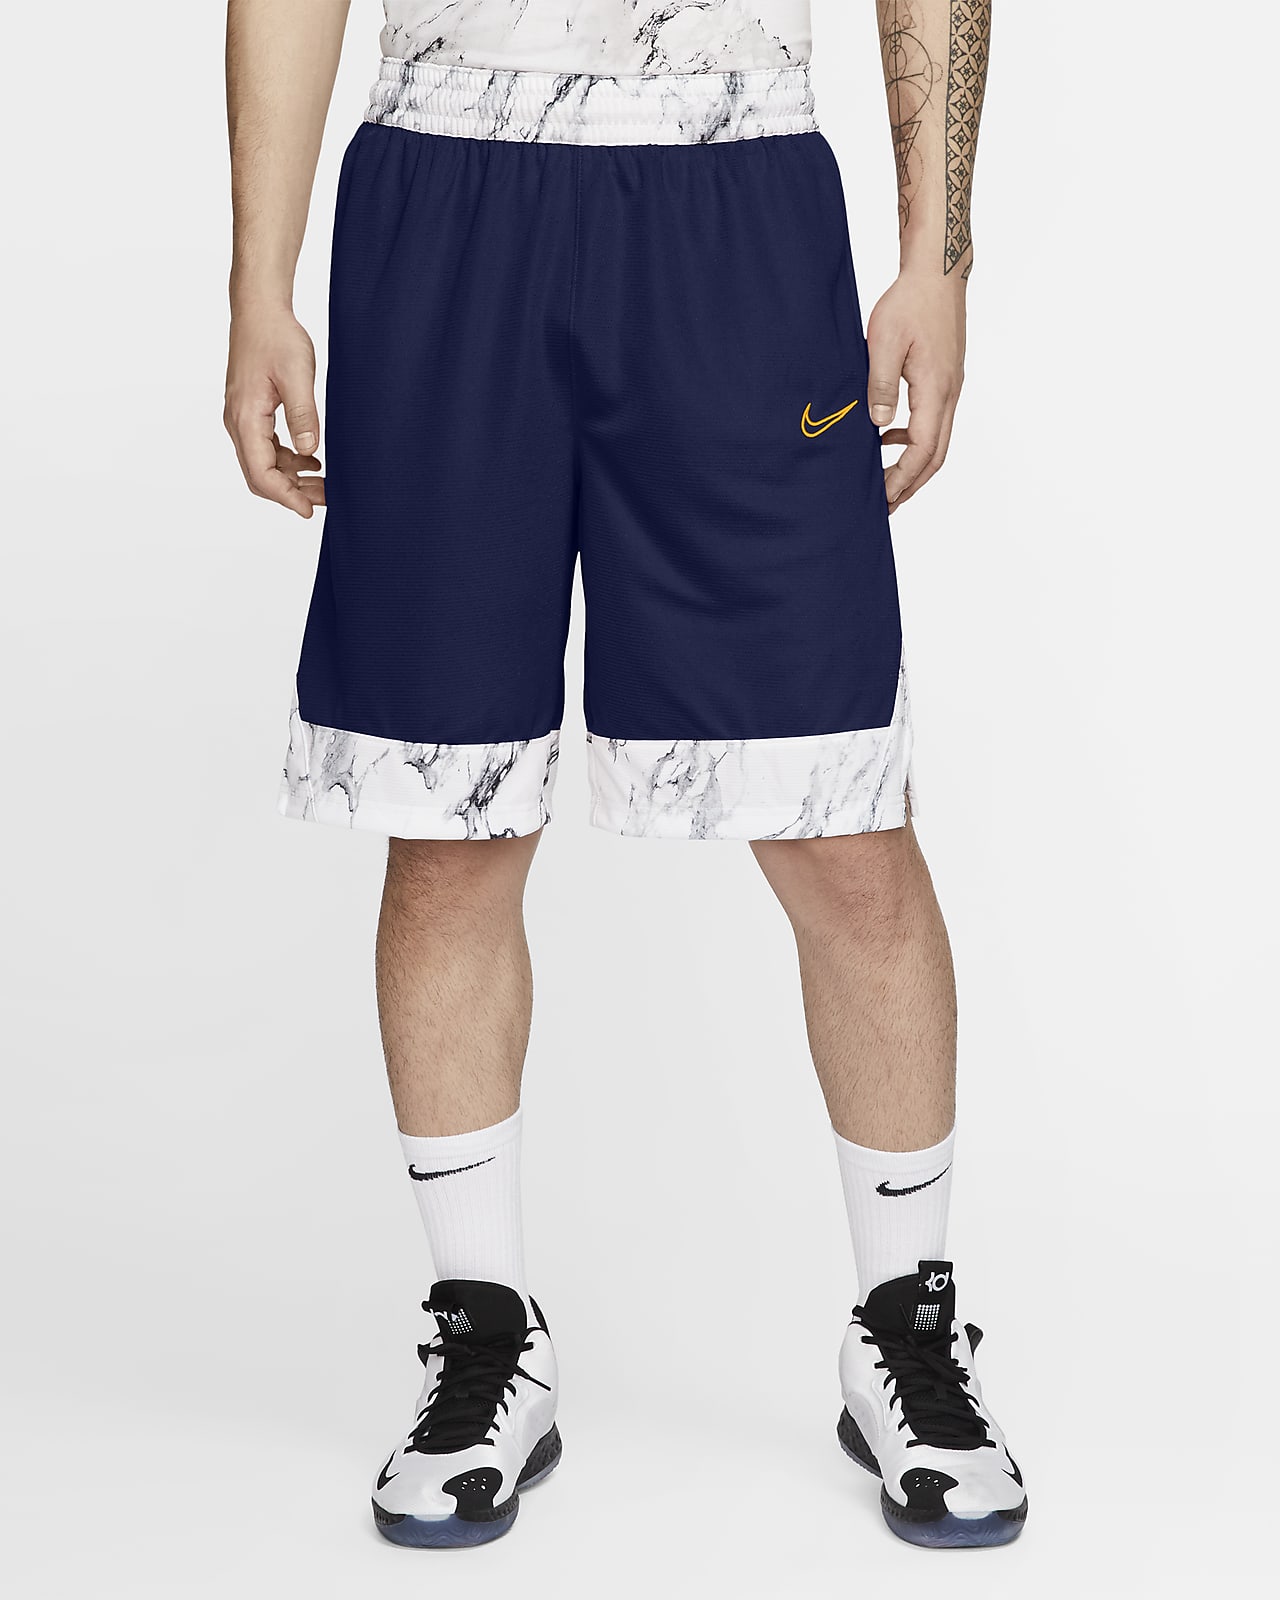 men's basketball shorts canada